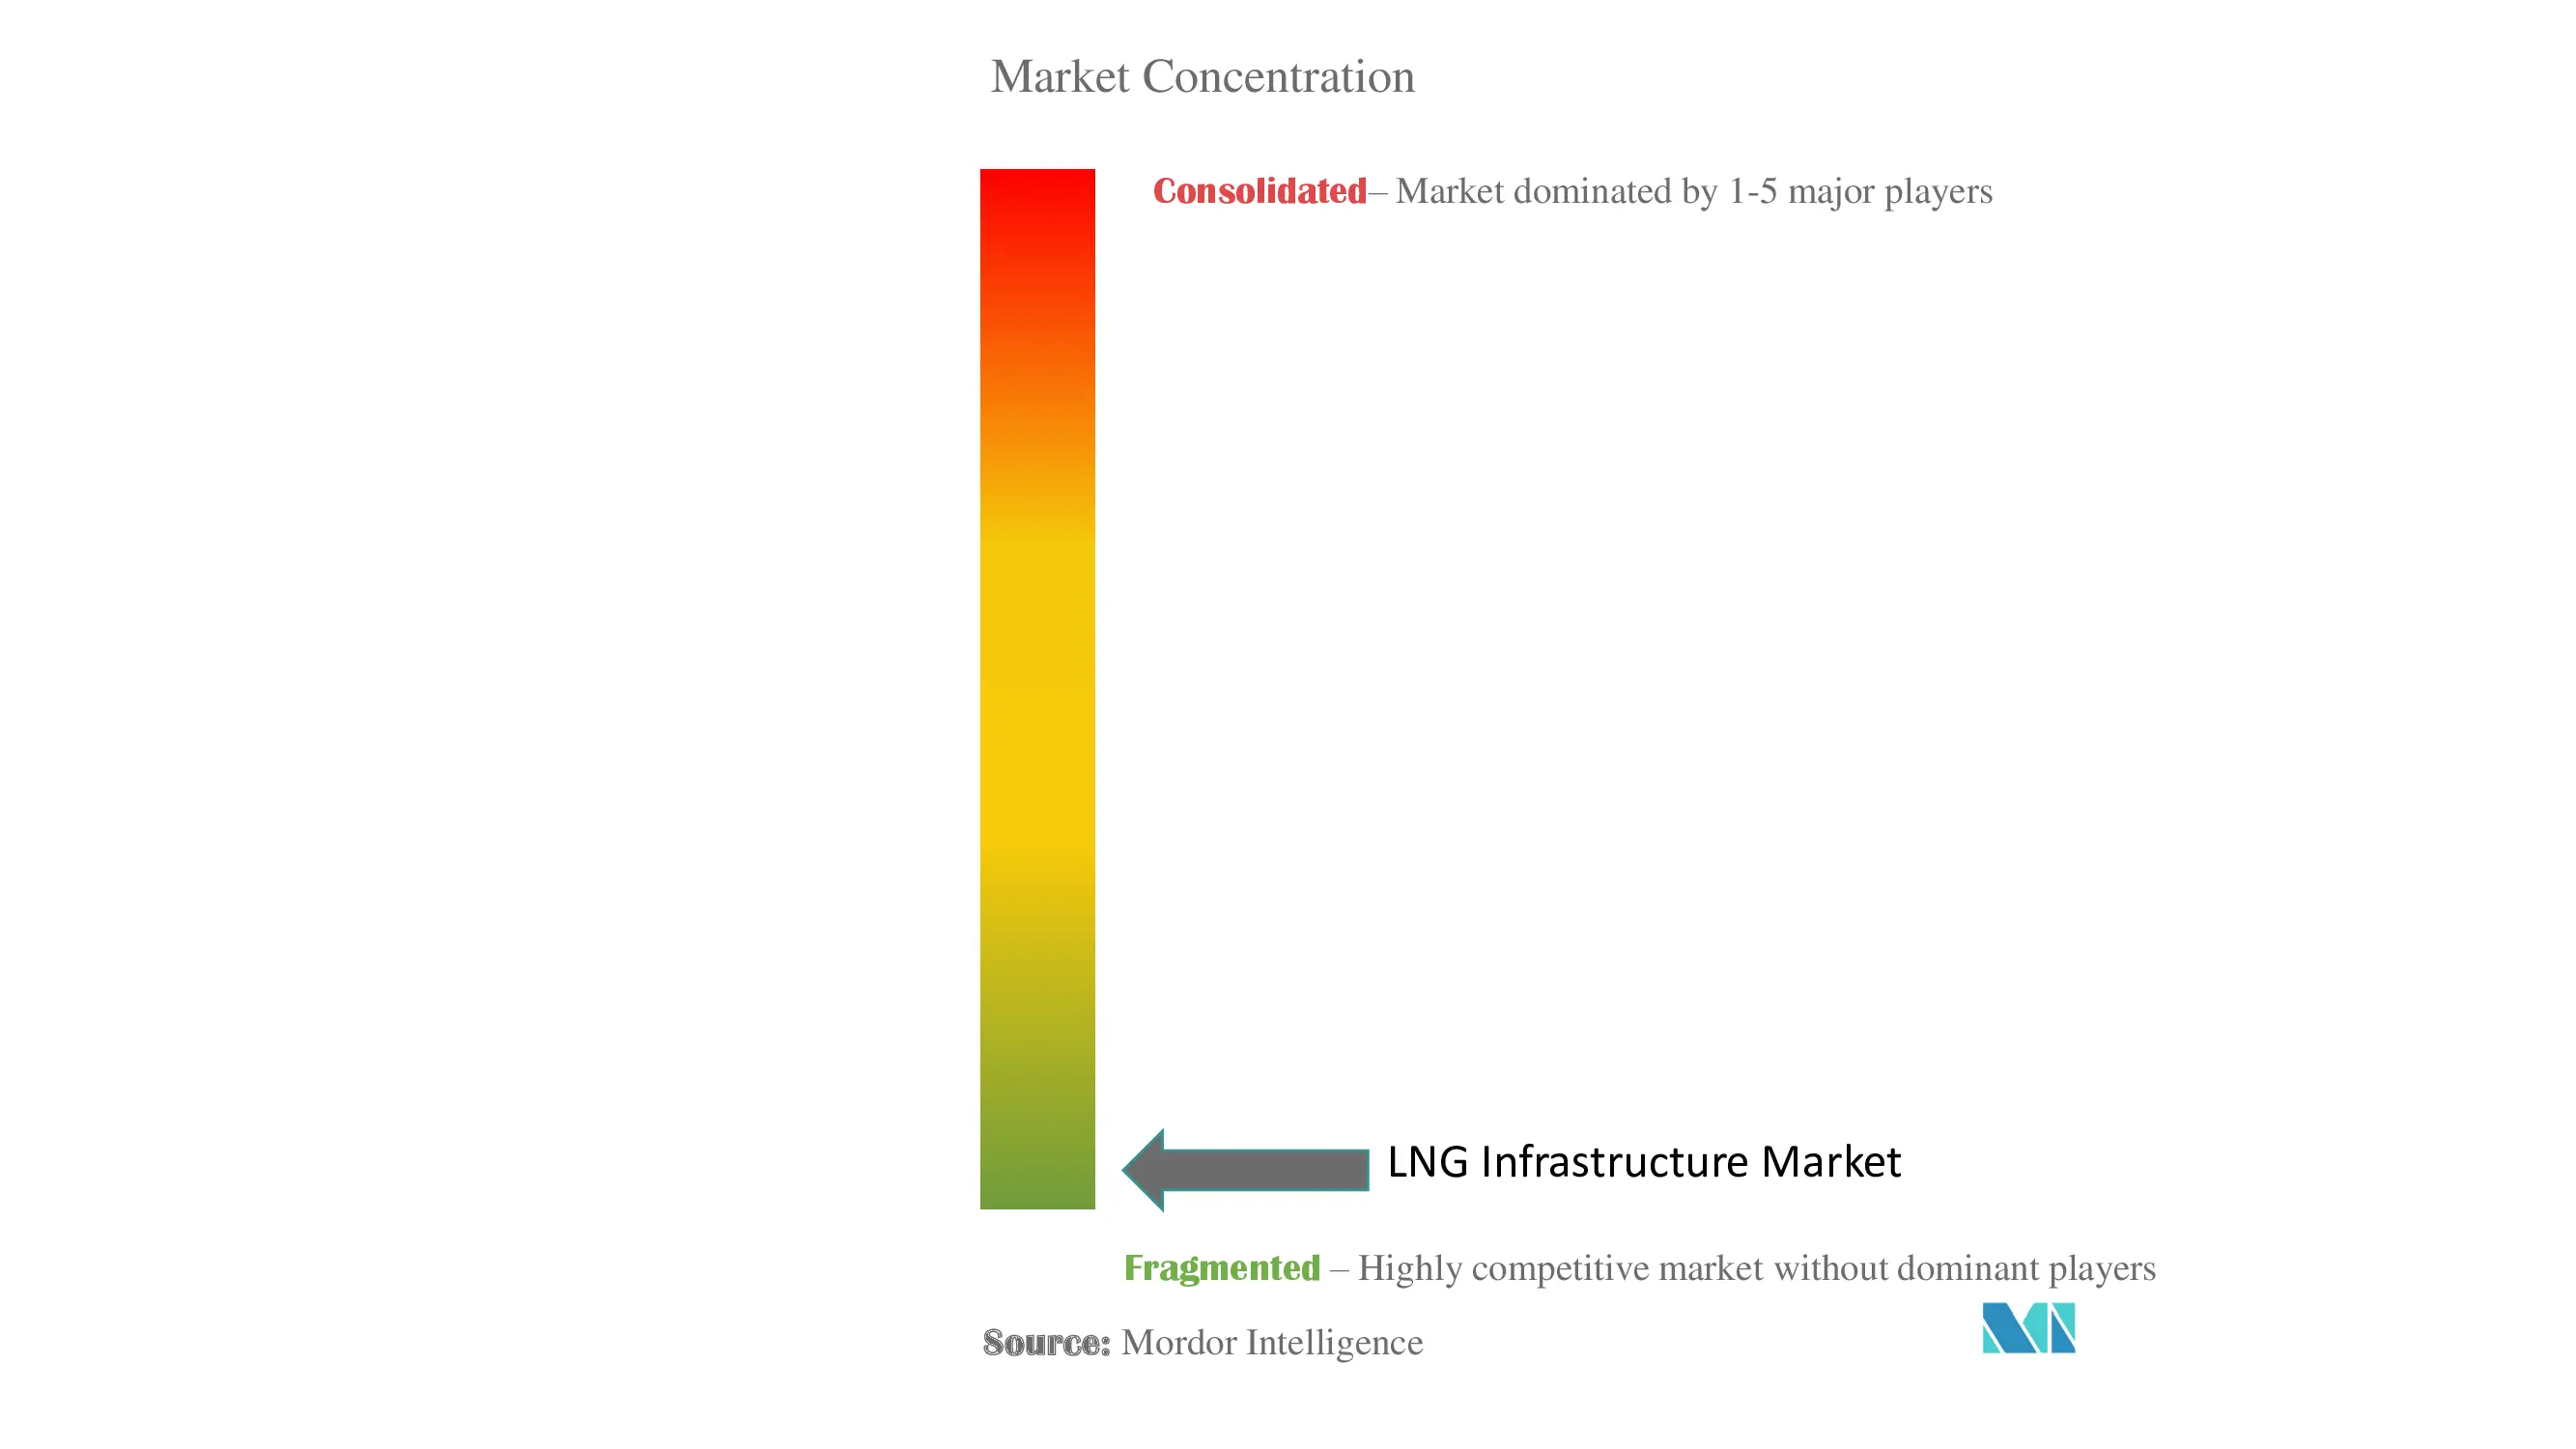 LNG Infrastructure Market Concentration